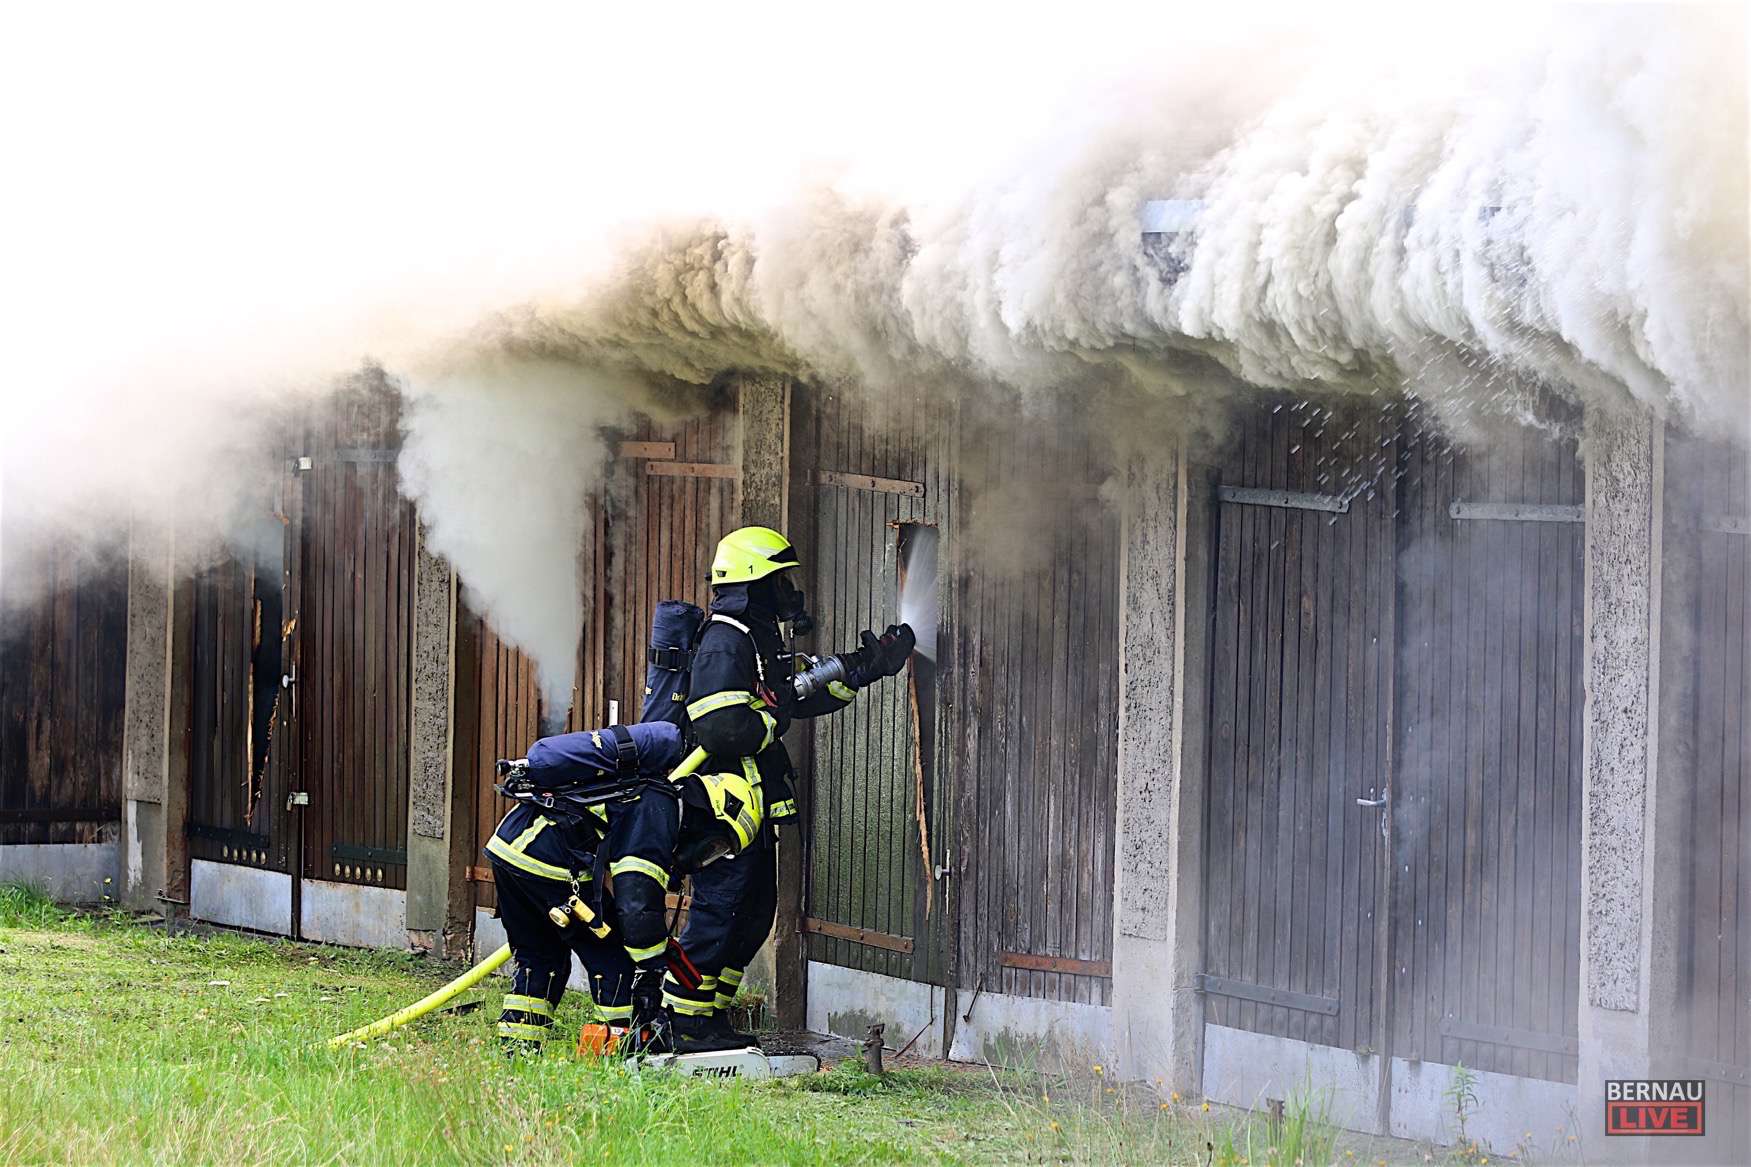 Grossbrand in Bernau - etwa 10 Garagen stehen in Flammen